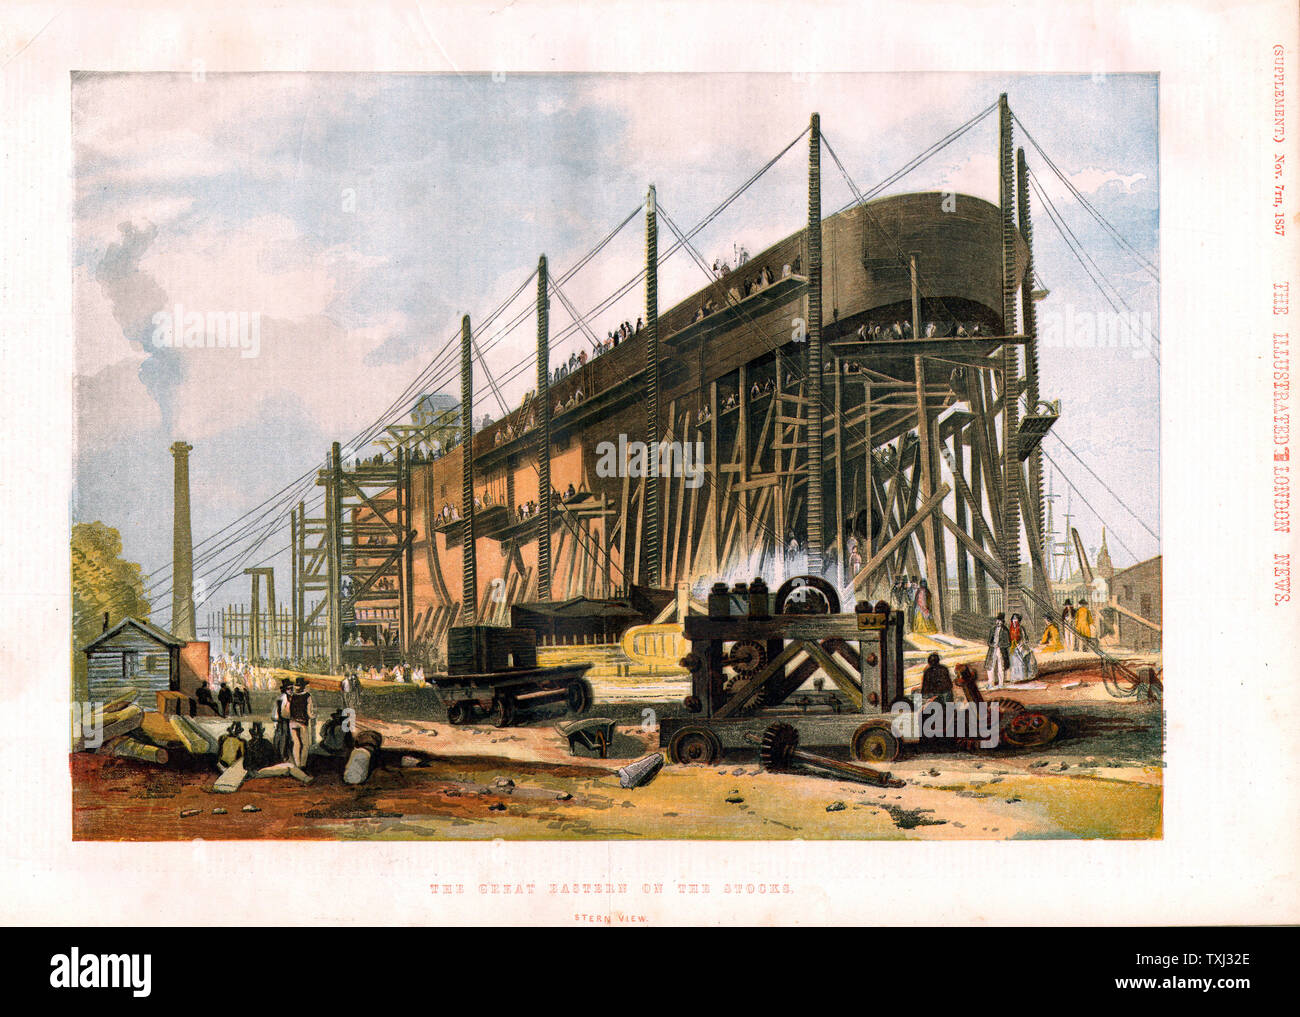 1857 Illustrated London News illustration Supplément d'Isambard Kingdom Brunel's SS Great Eastern de navires en construction à Millwall, Londres Banque D'Images